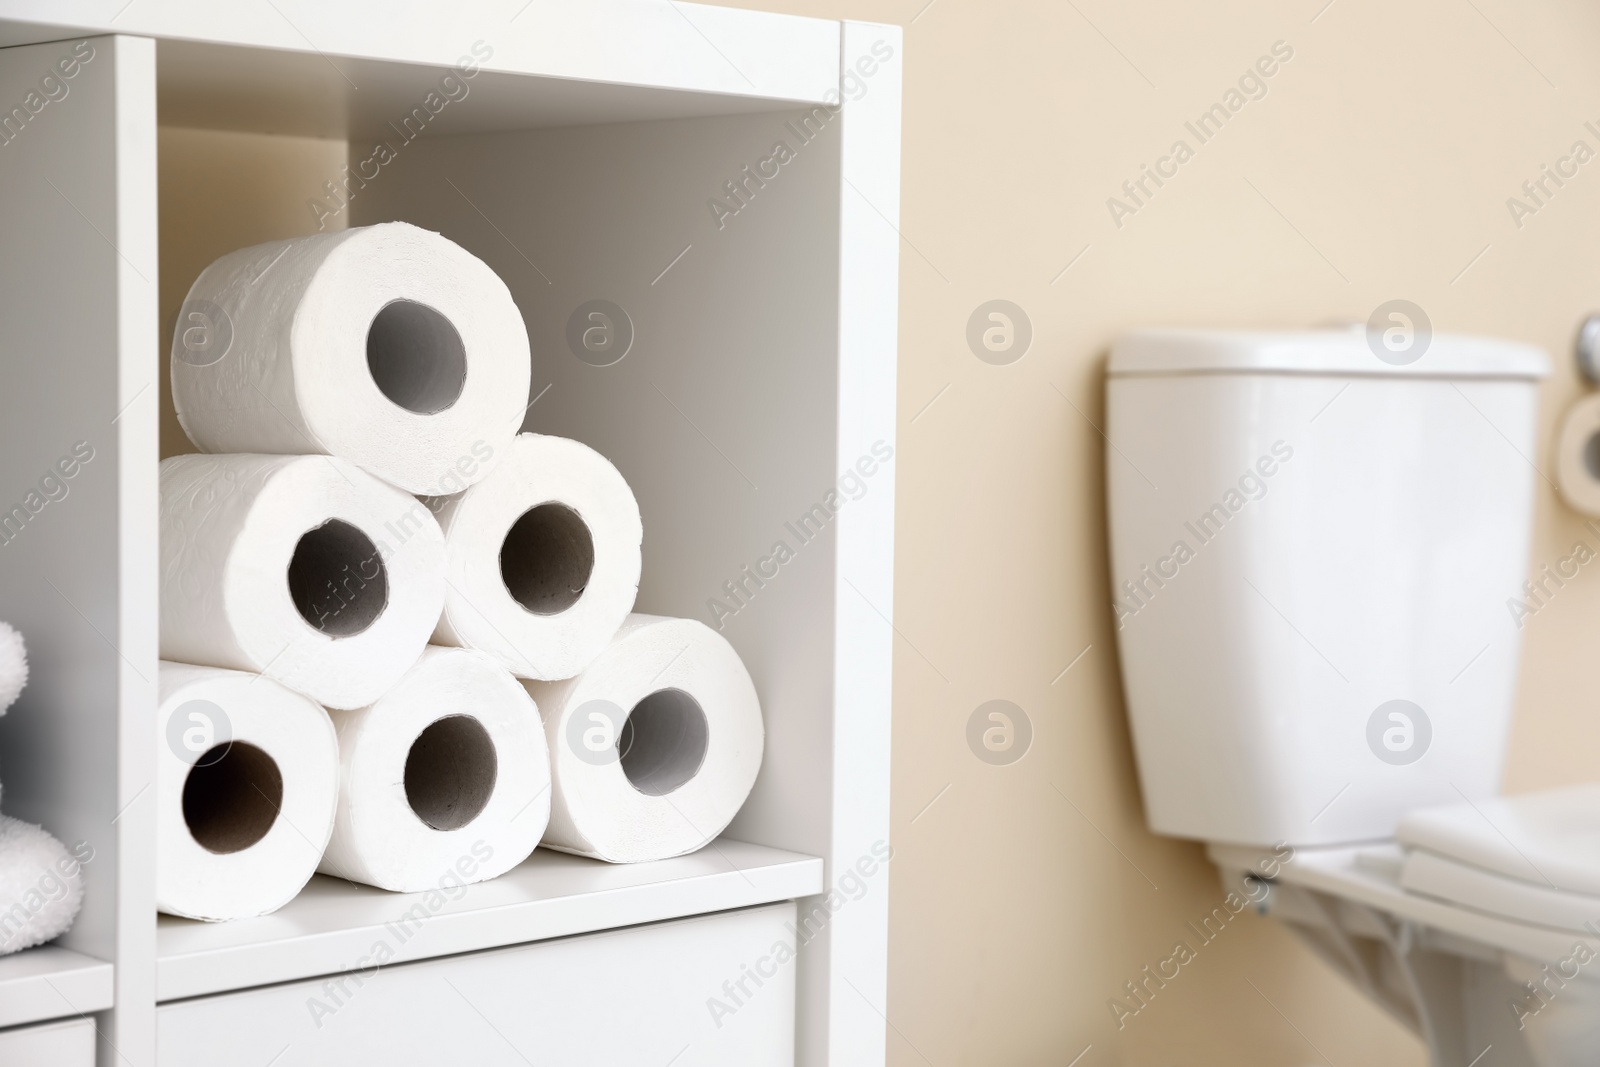 Photo of Toilet paper rolls on cabinet shelf in bathroom